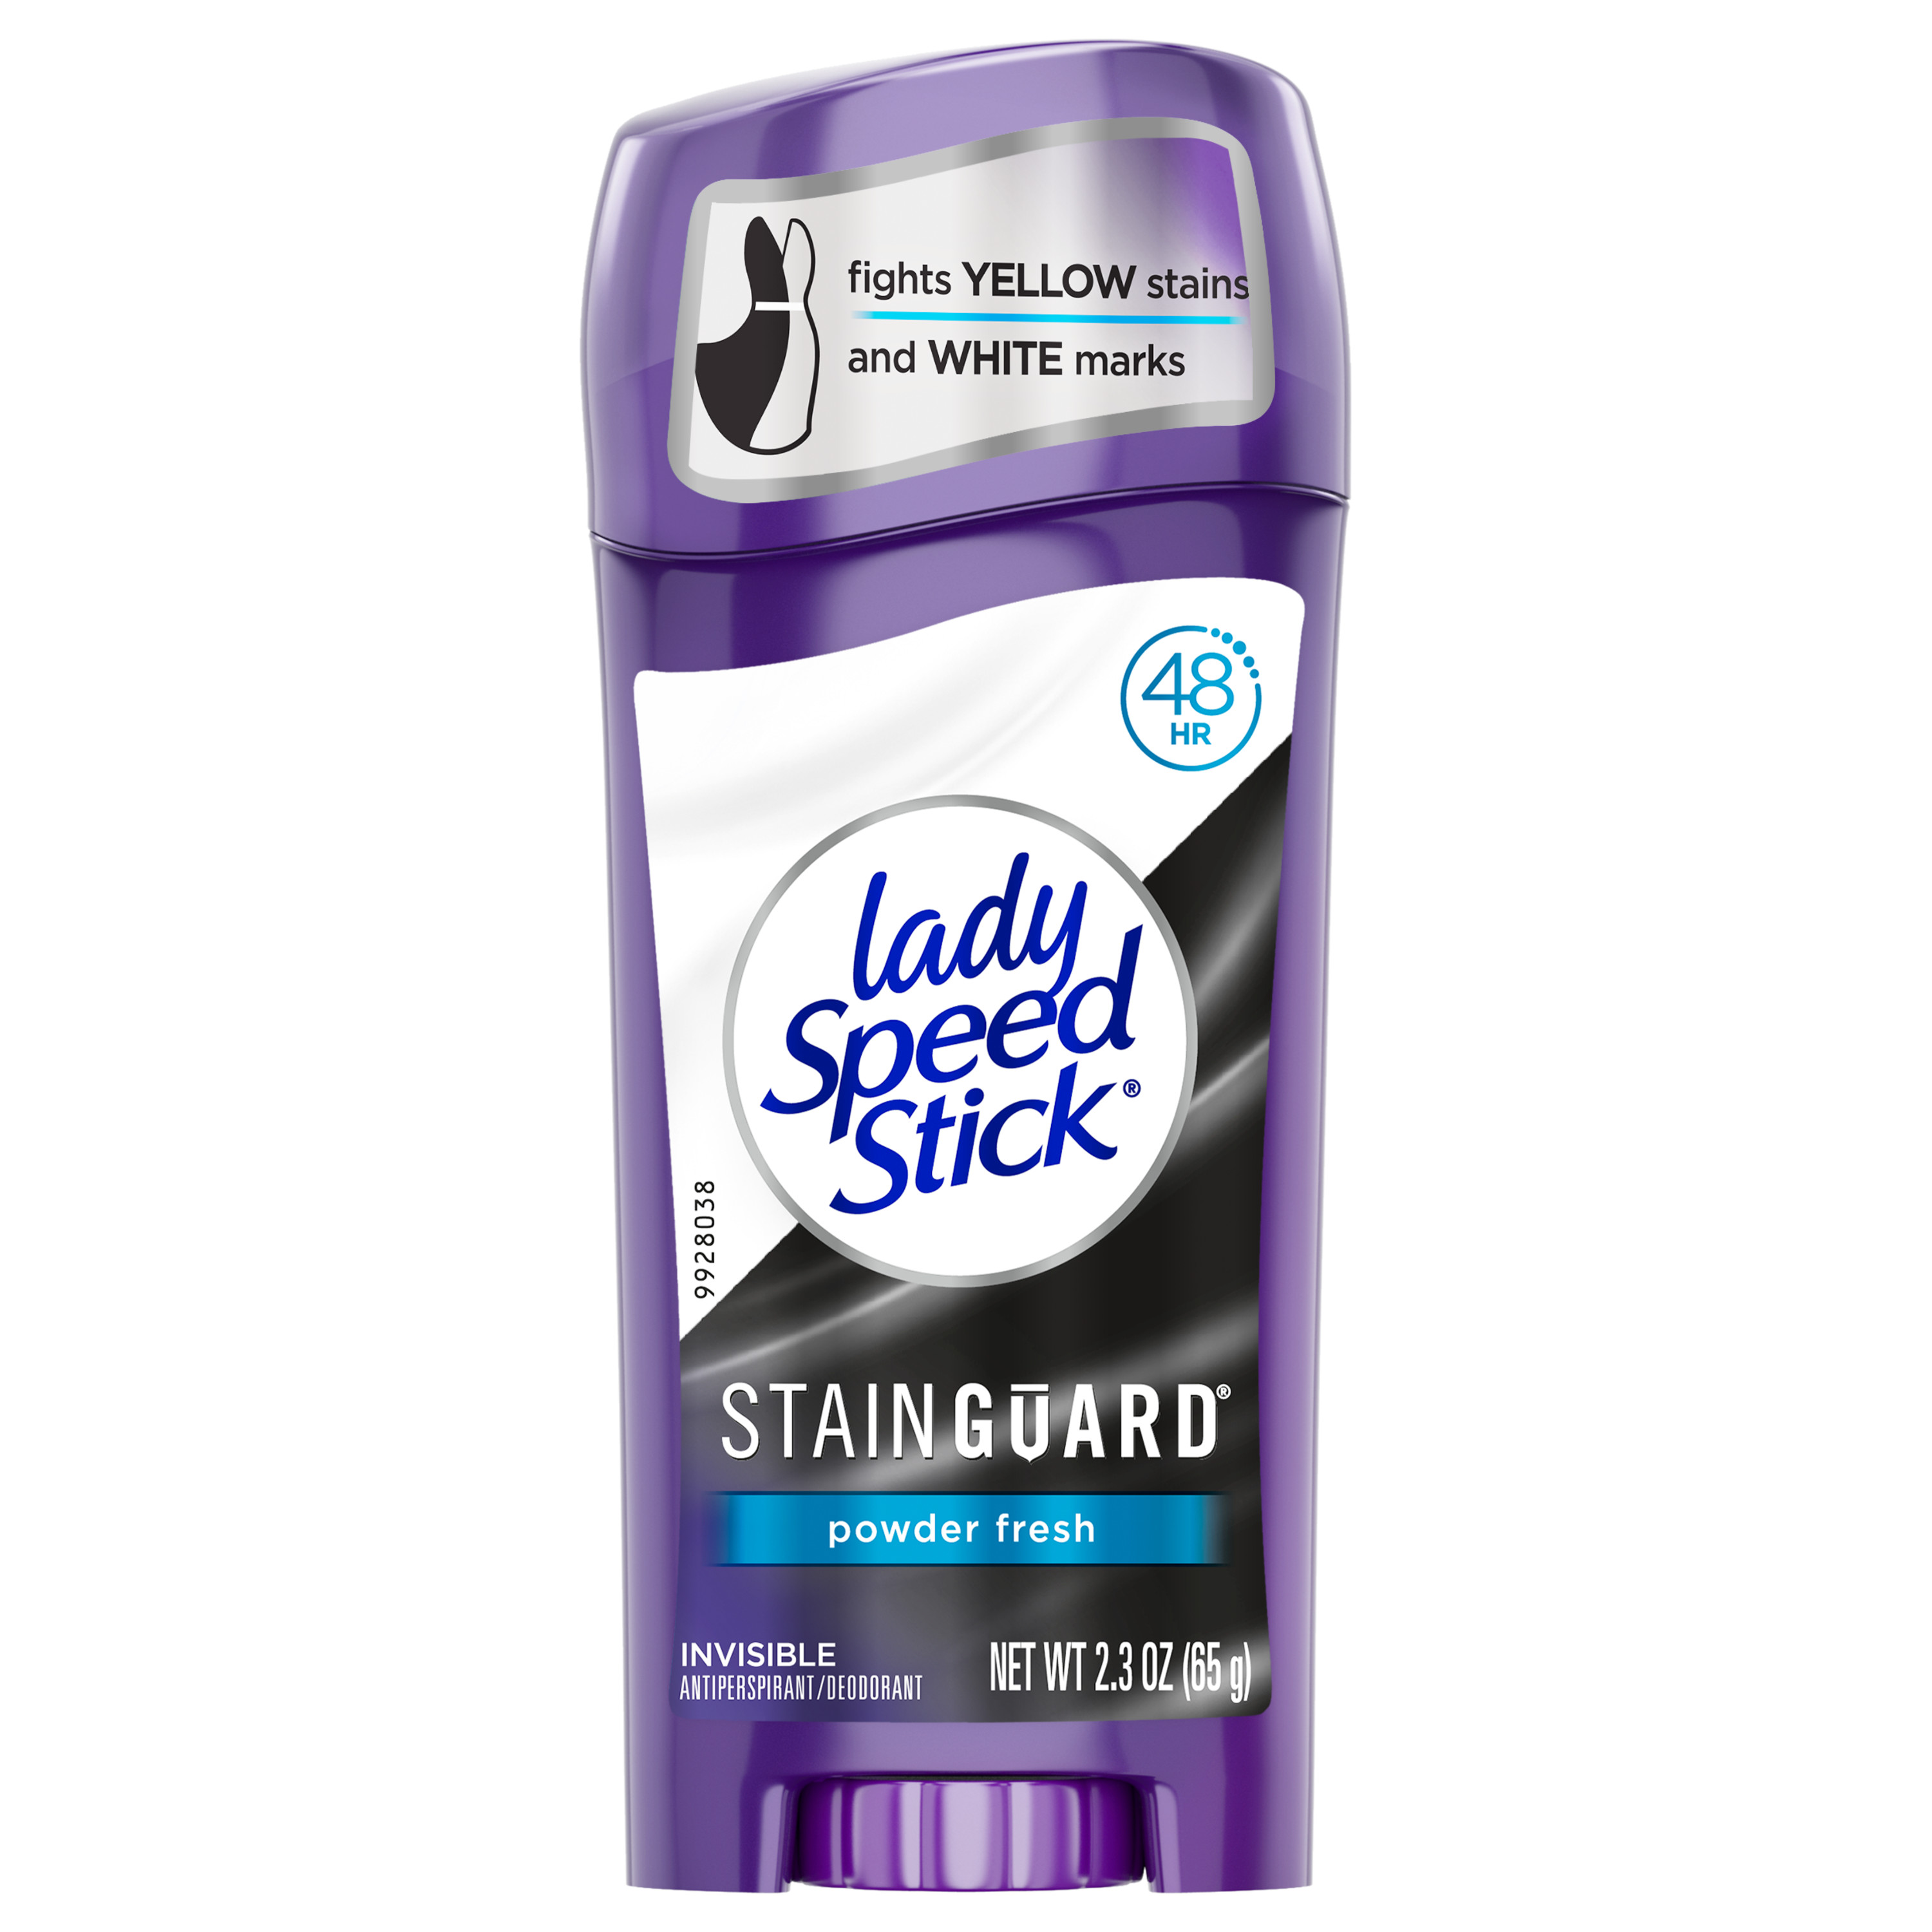 Lady Speed Stick Stainguard Antiperspirant Female Deodorant, Powder Fresh, 2.3 oz - image 1 of 3